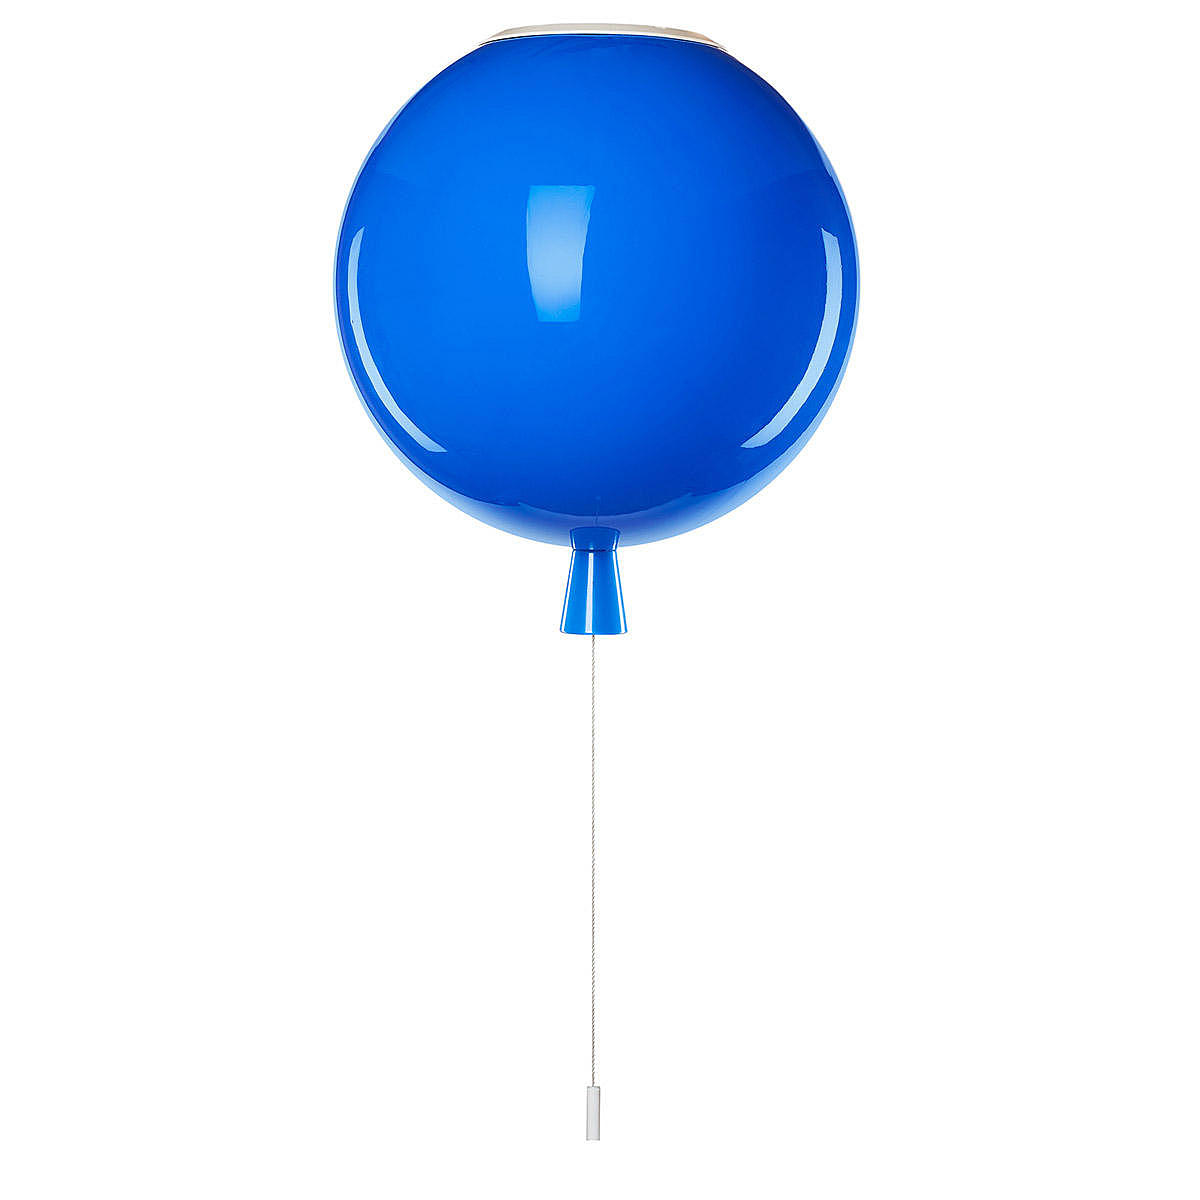     Balloon 5055C/L blue Loft It